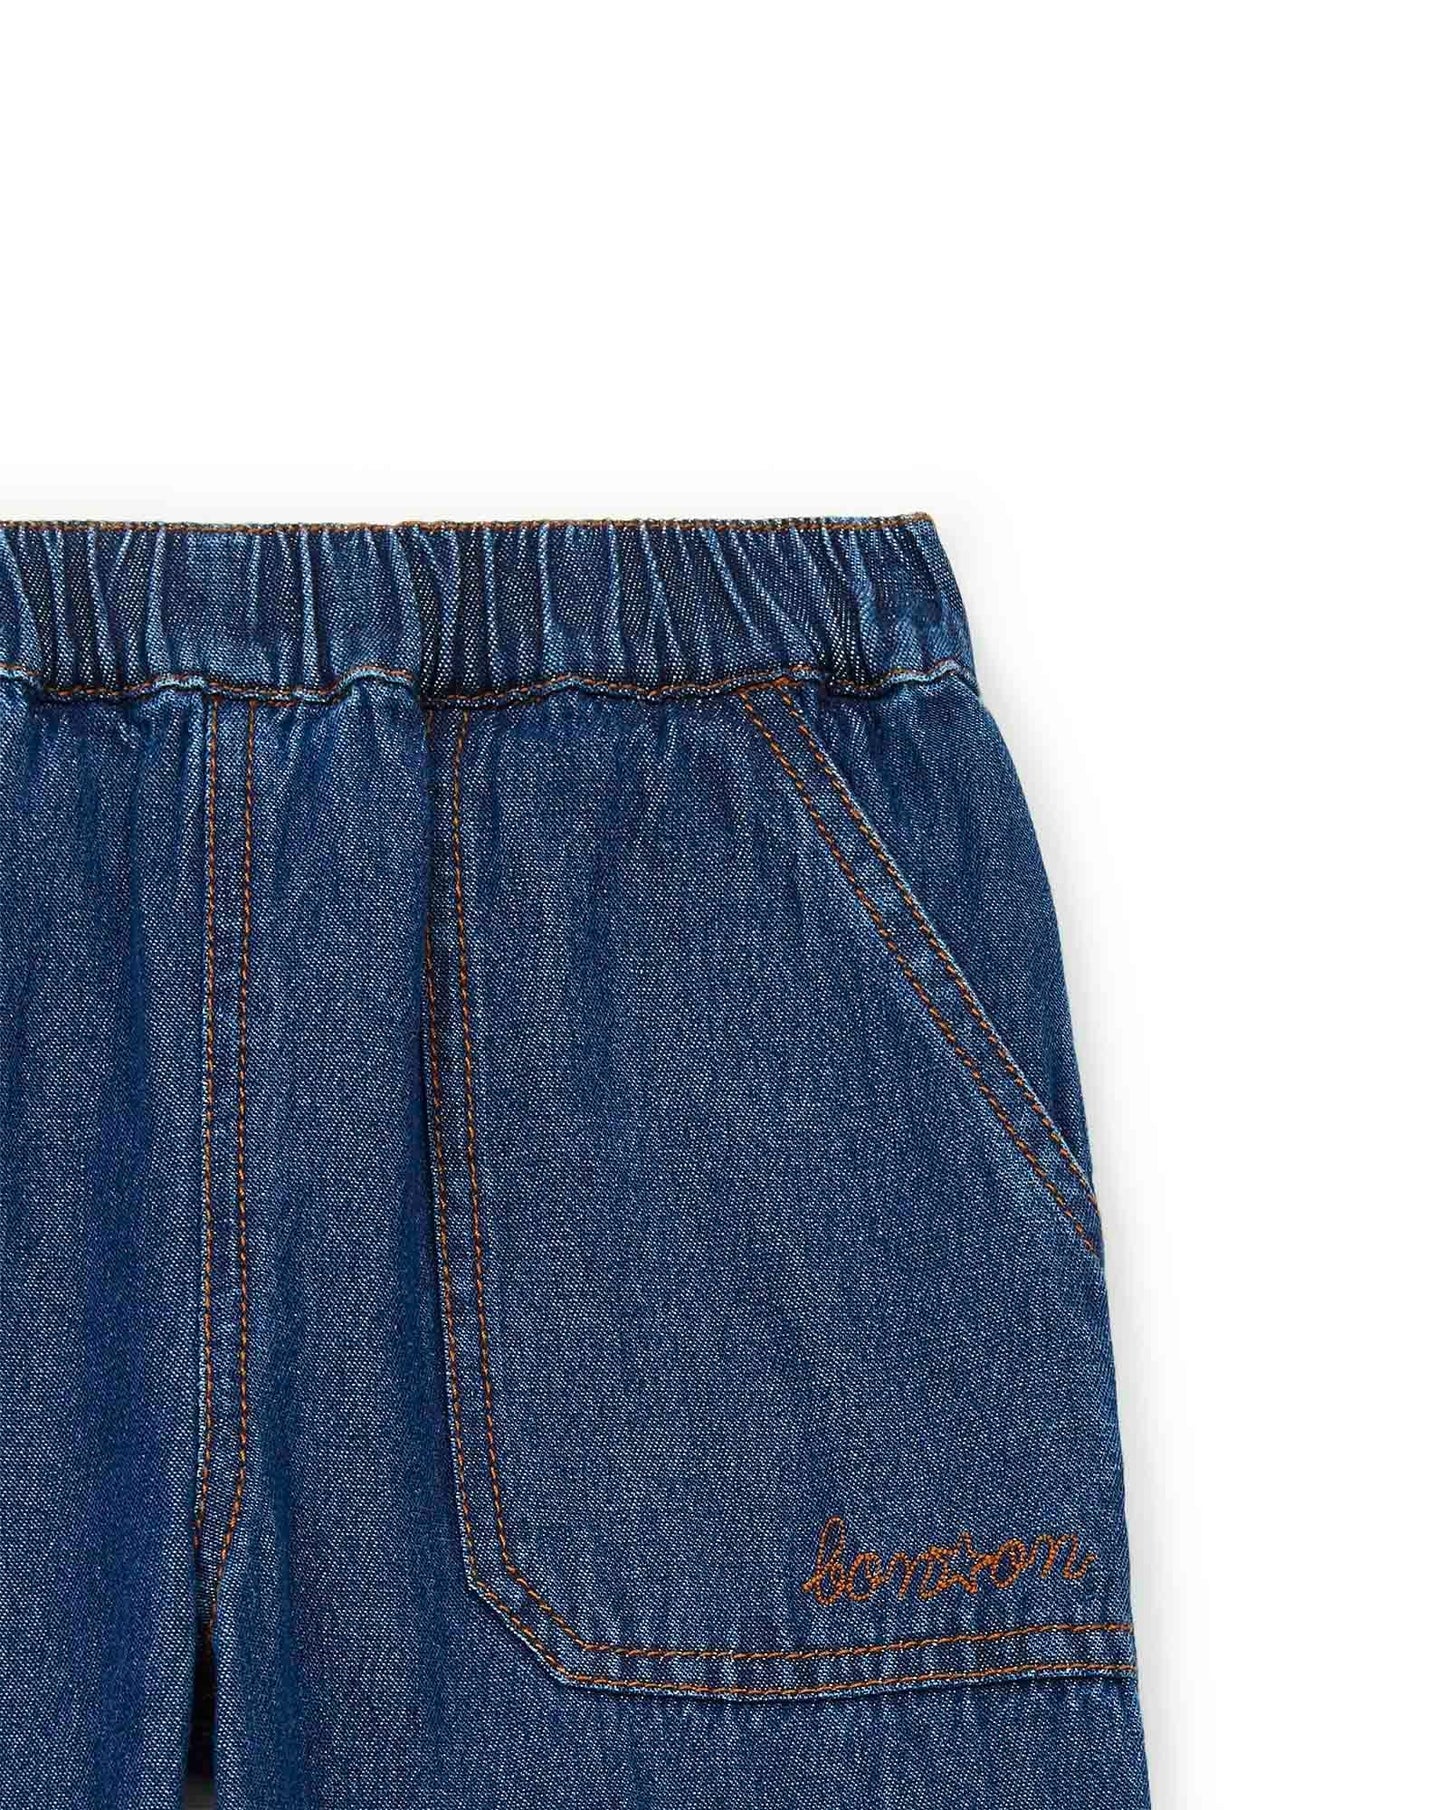 Pantalon - Batcha bleu en denim brut